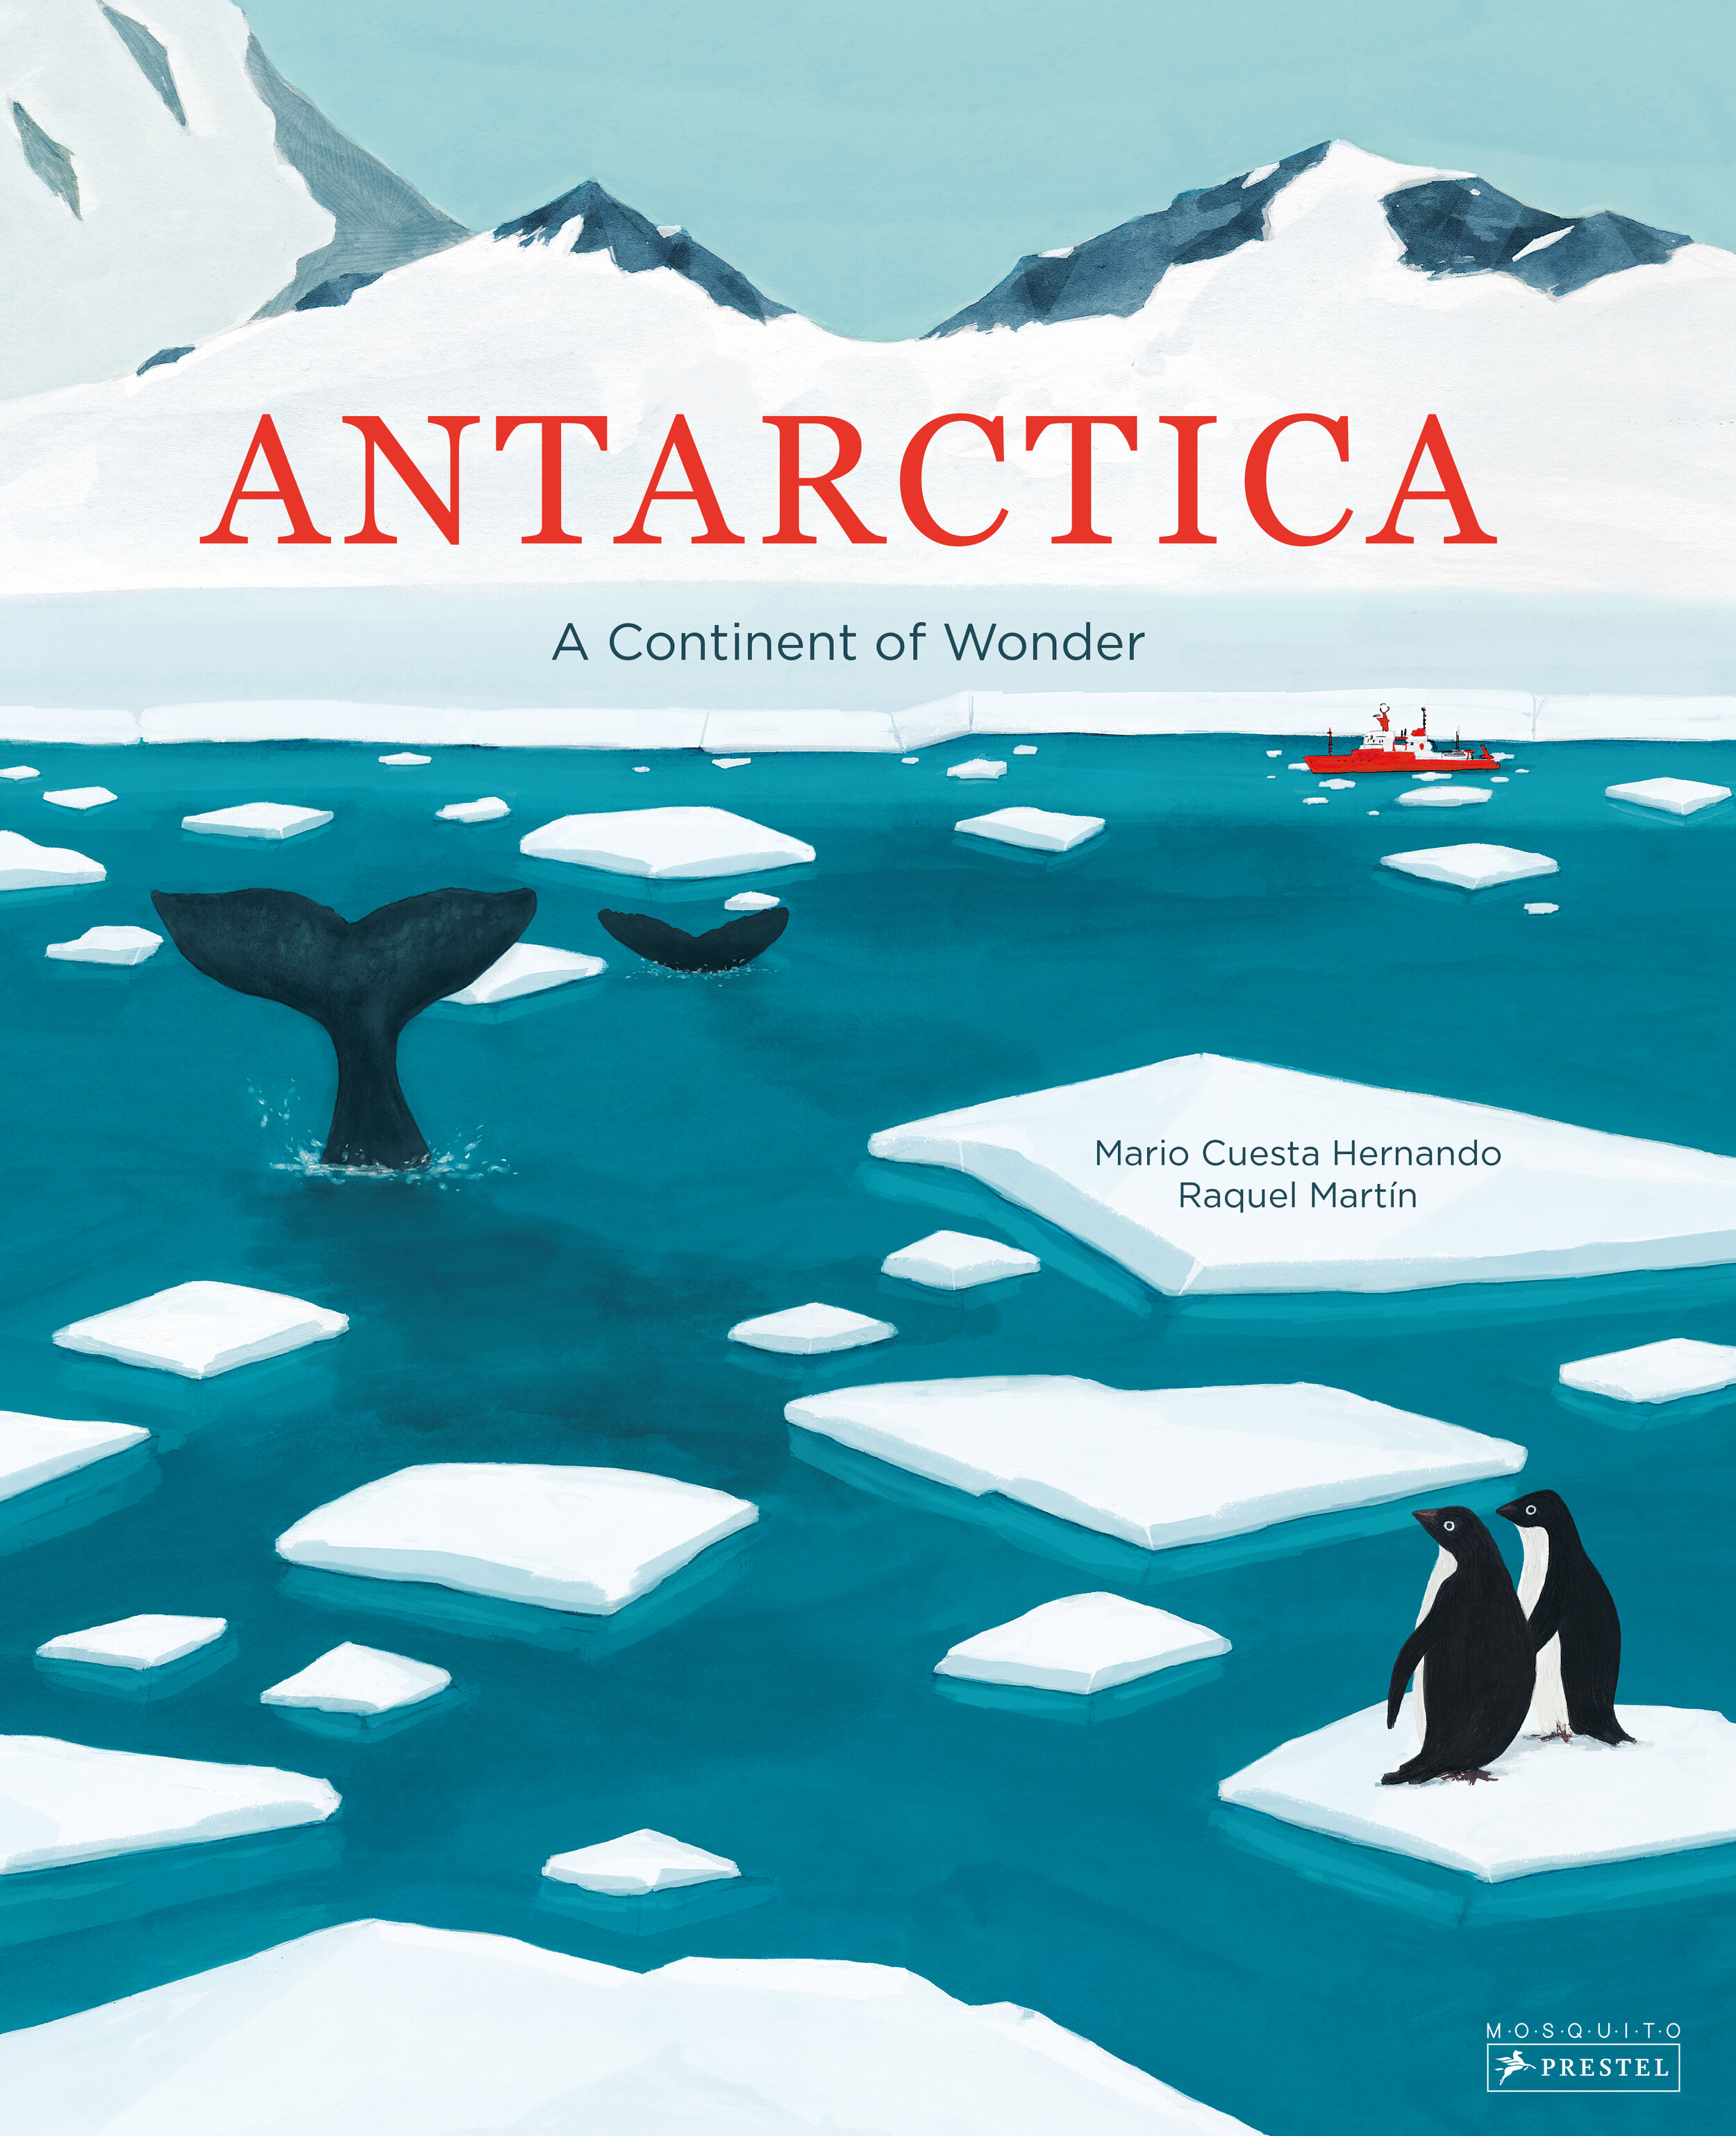 Antarctica_211081_300dpi.jpg